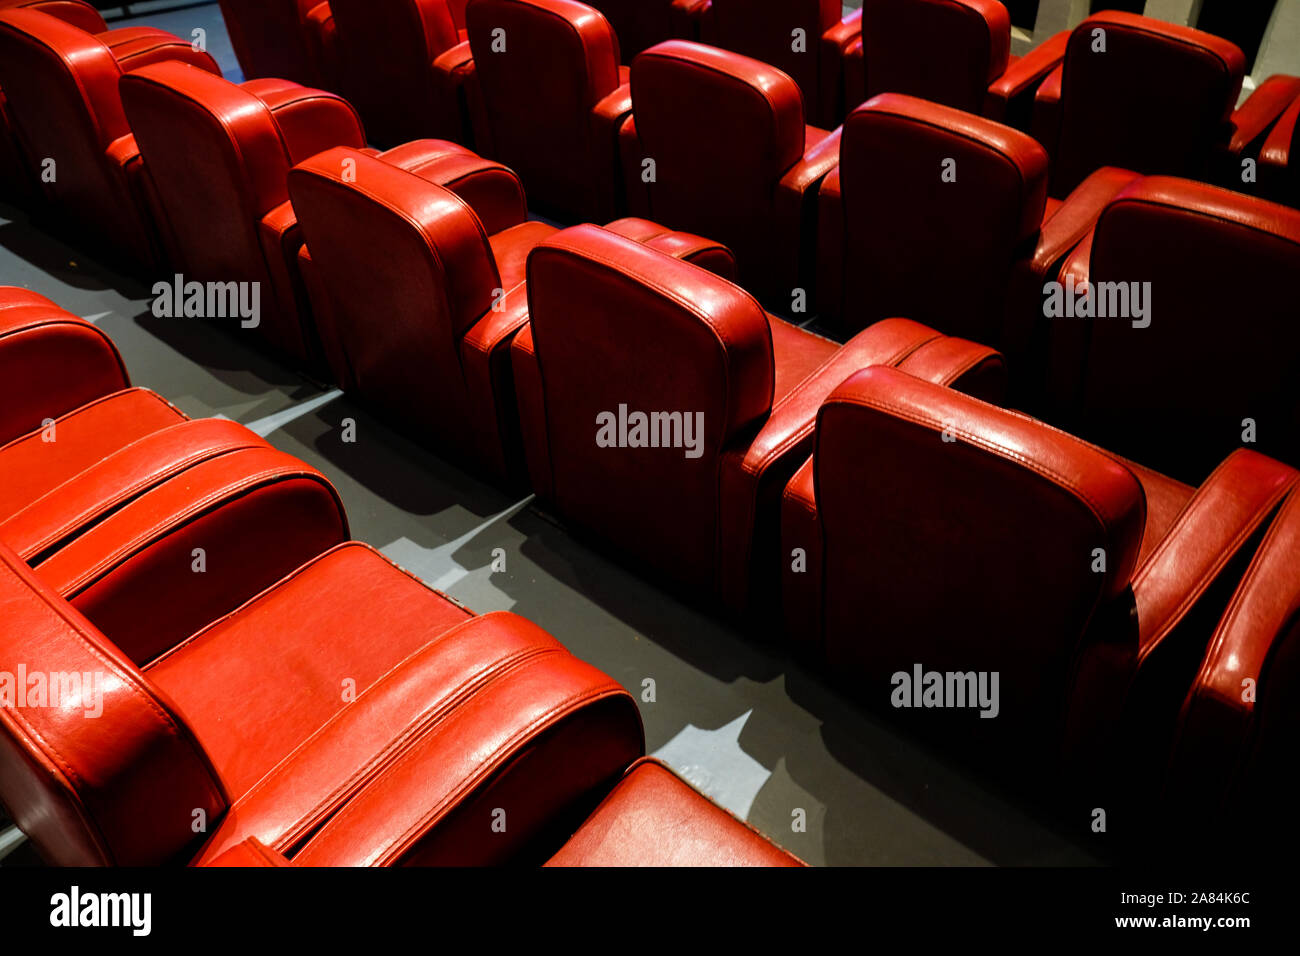 Theater leather seats, Paris Stock Photo